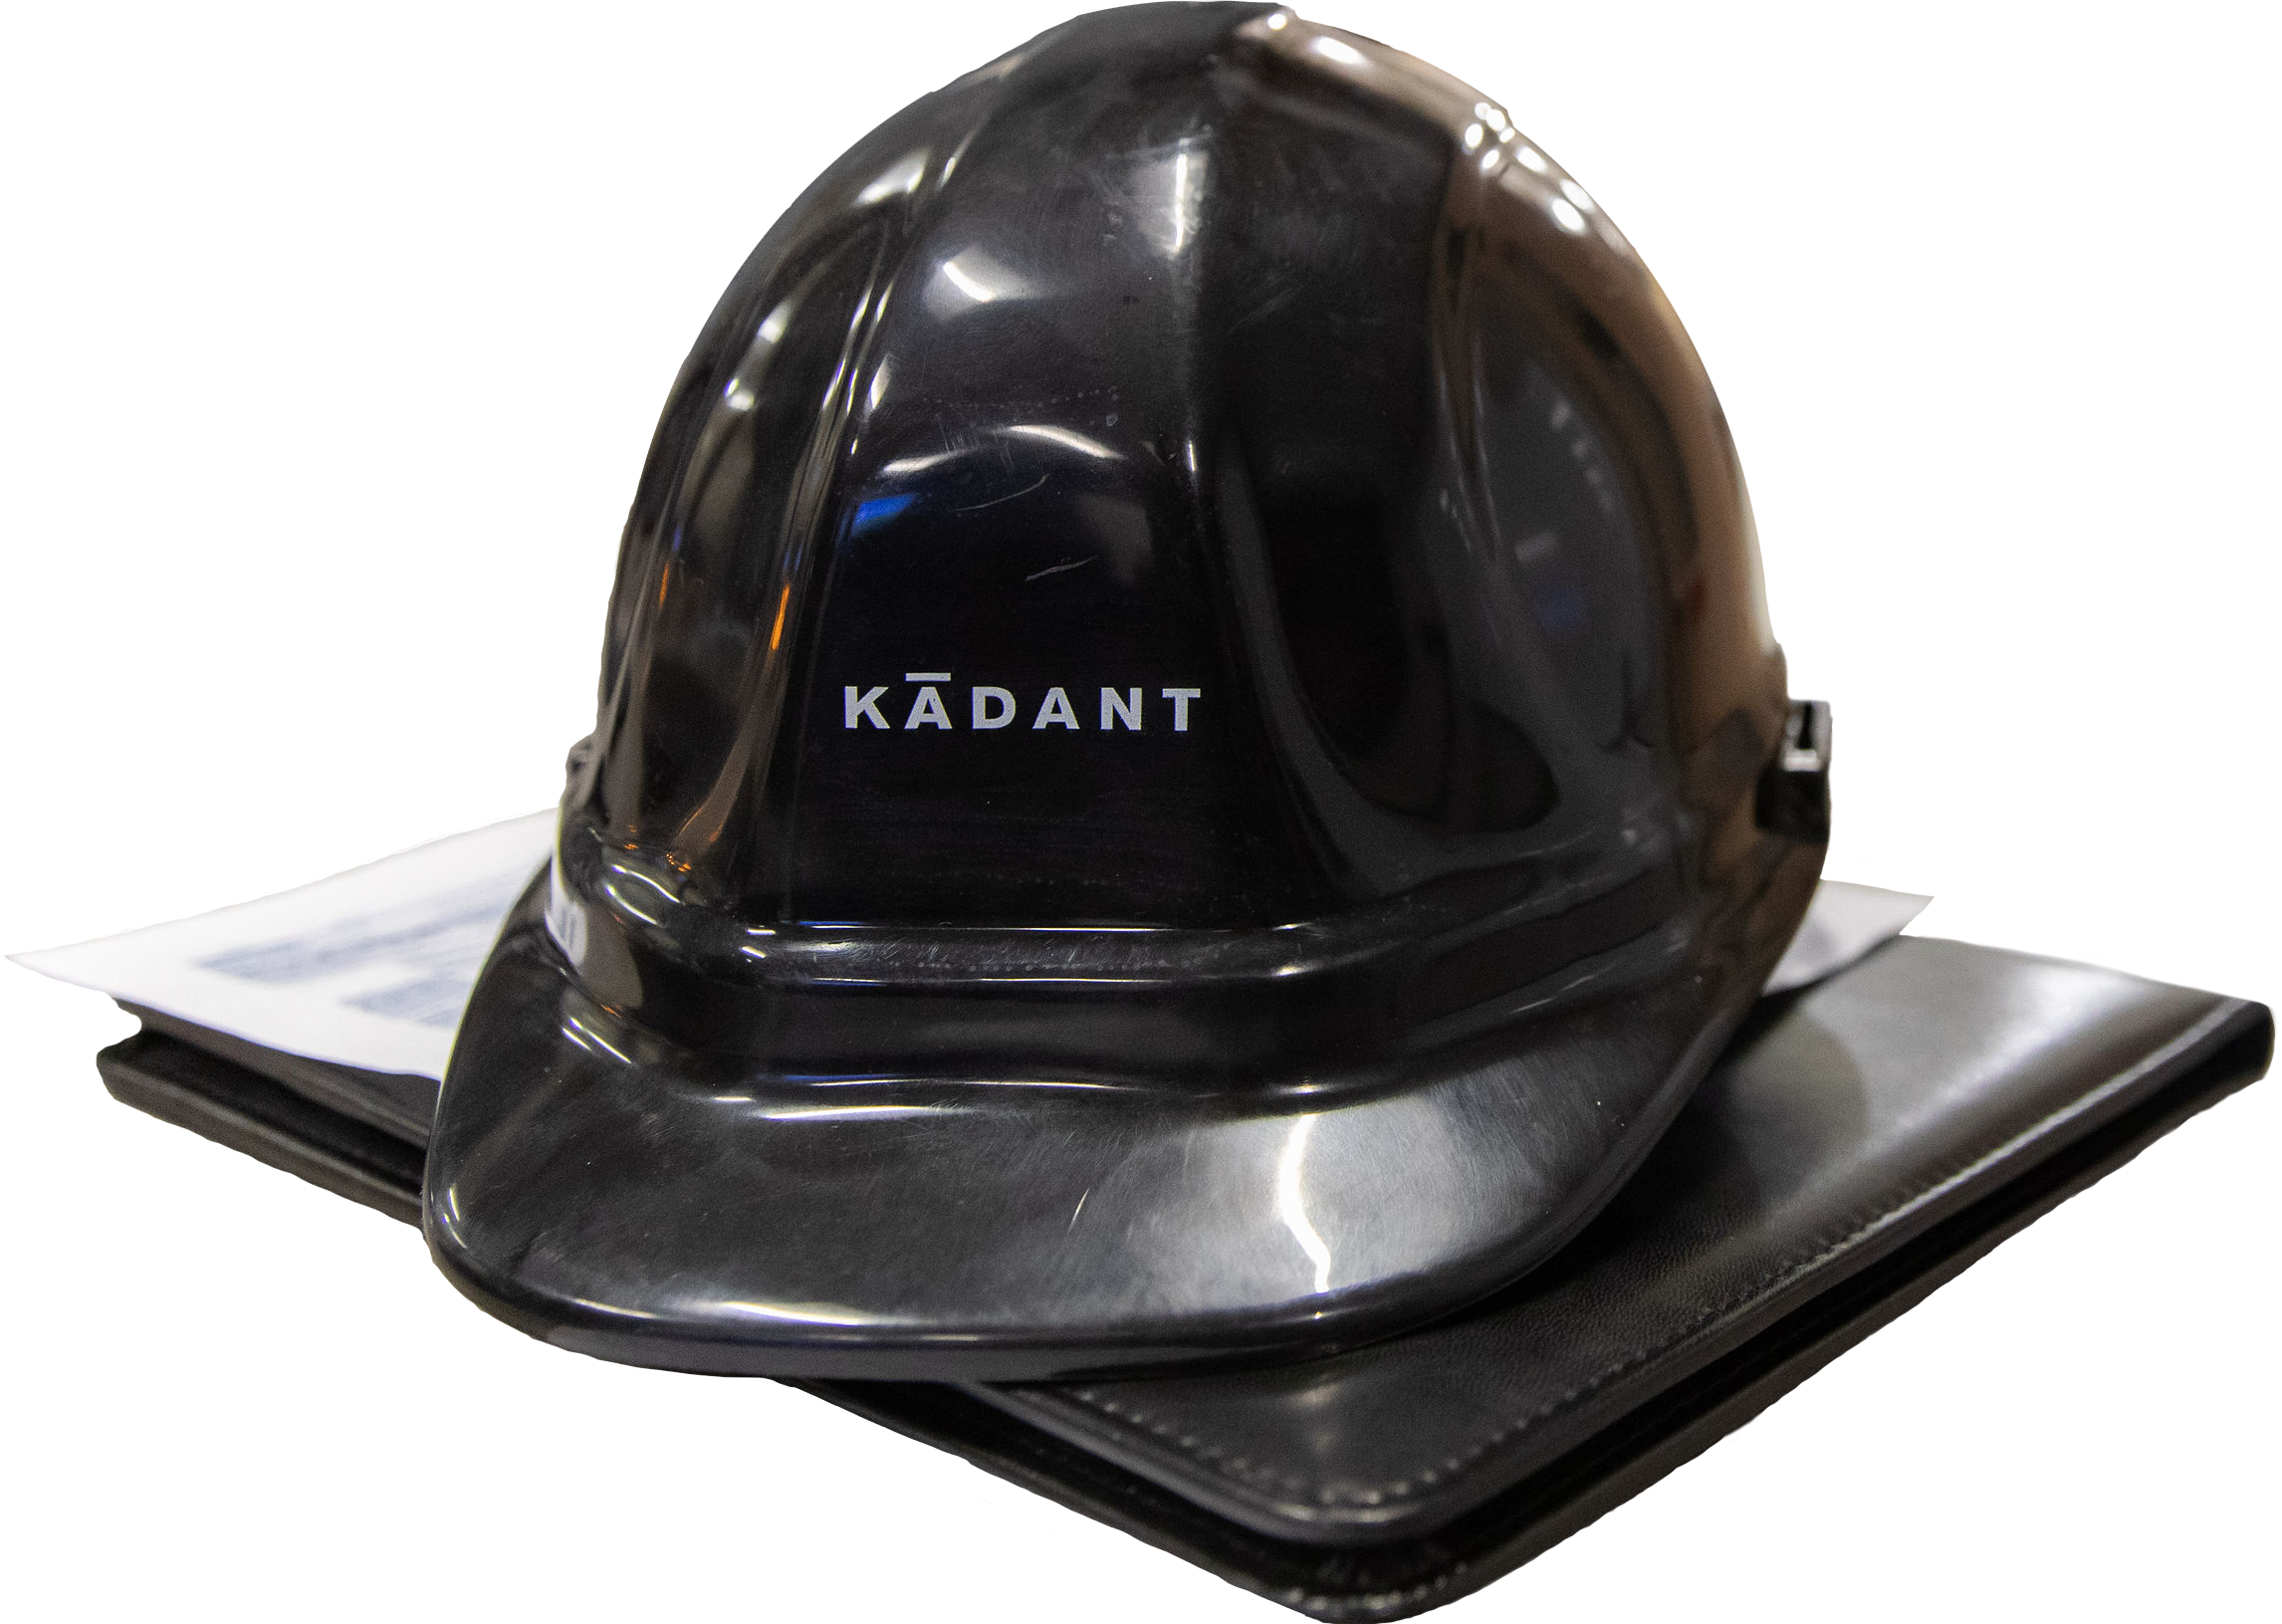 Kadant Inc. - Choosing an Effective & Efficient Syphon System